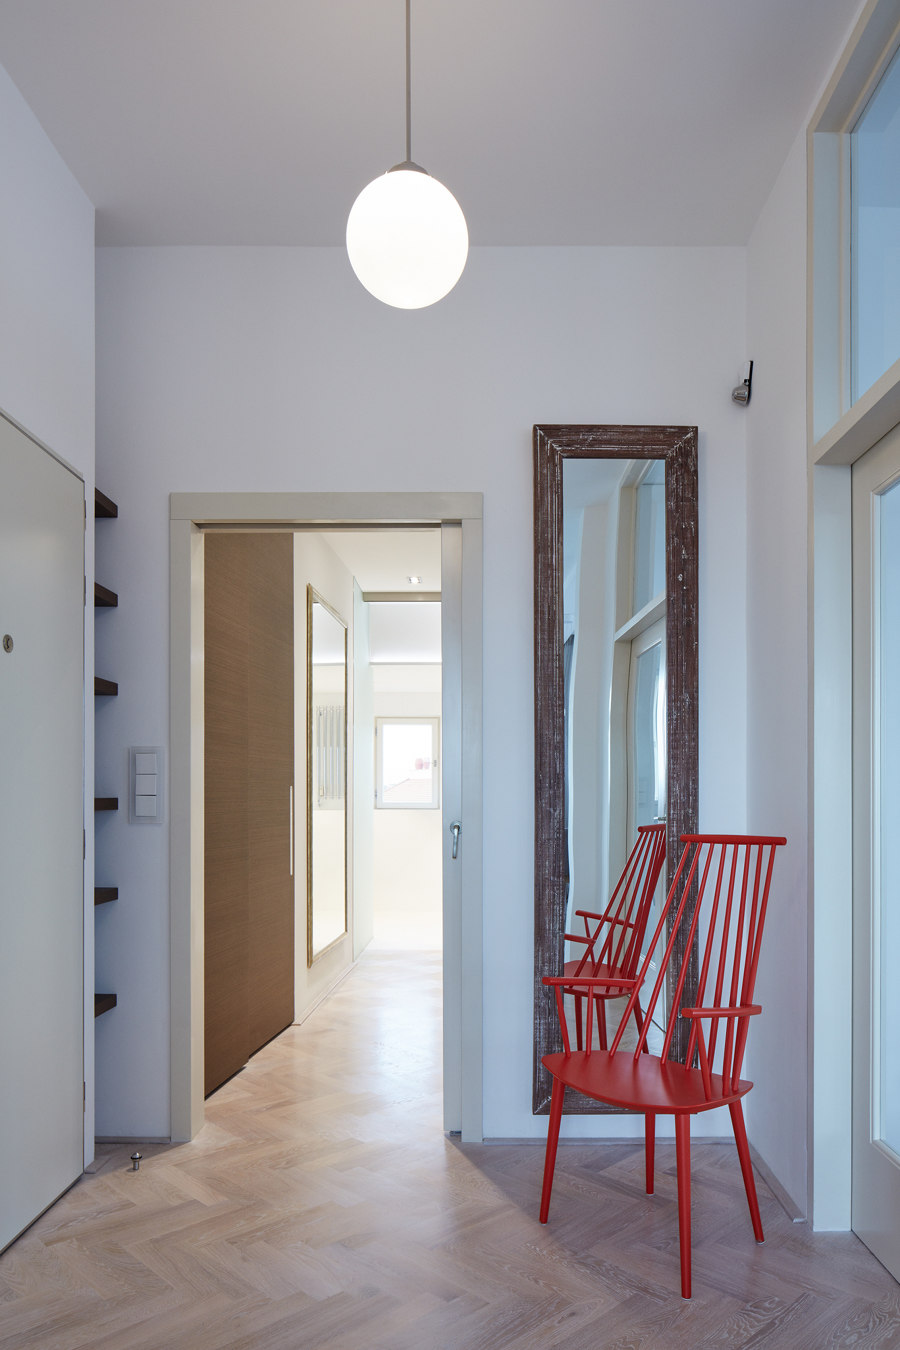 Apartment Letna di Objectum | Locali abitativi